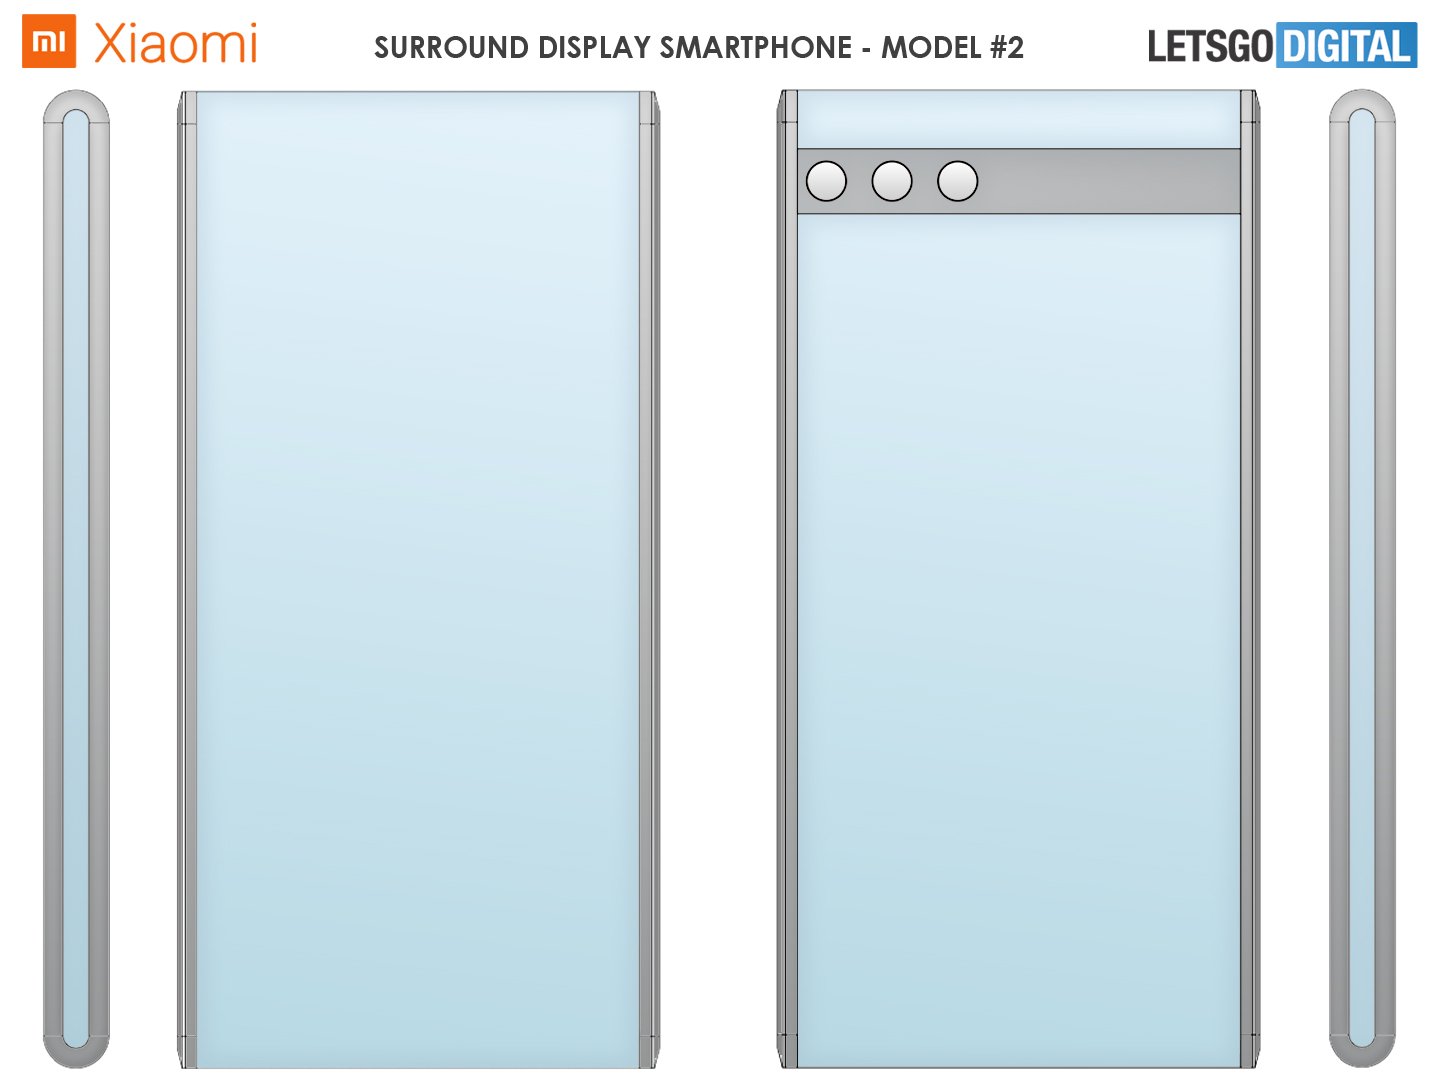 Xiaomi Surround Display Smartphone Design Patent 02